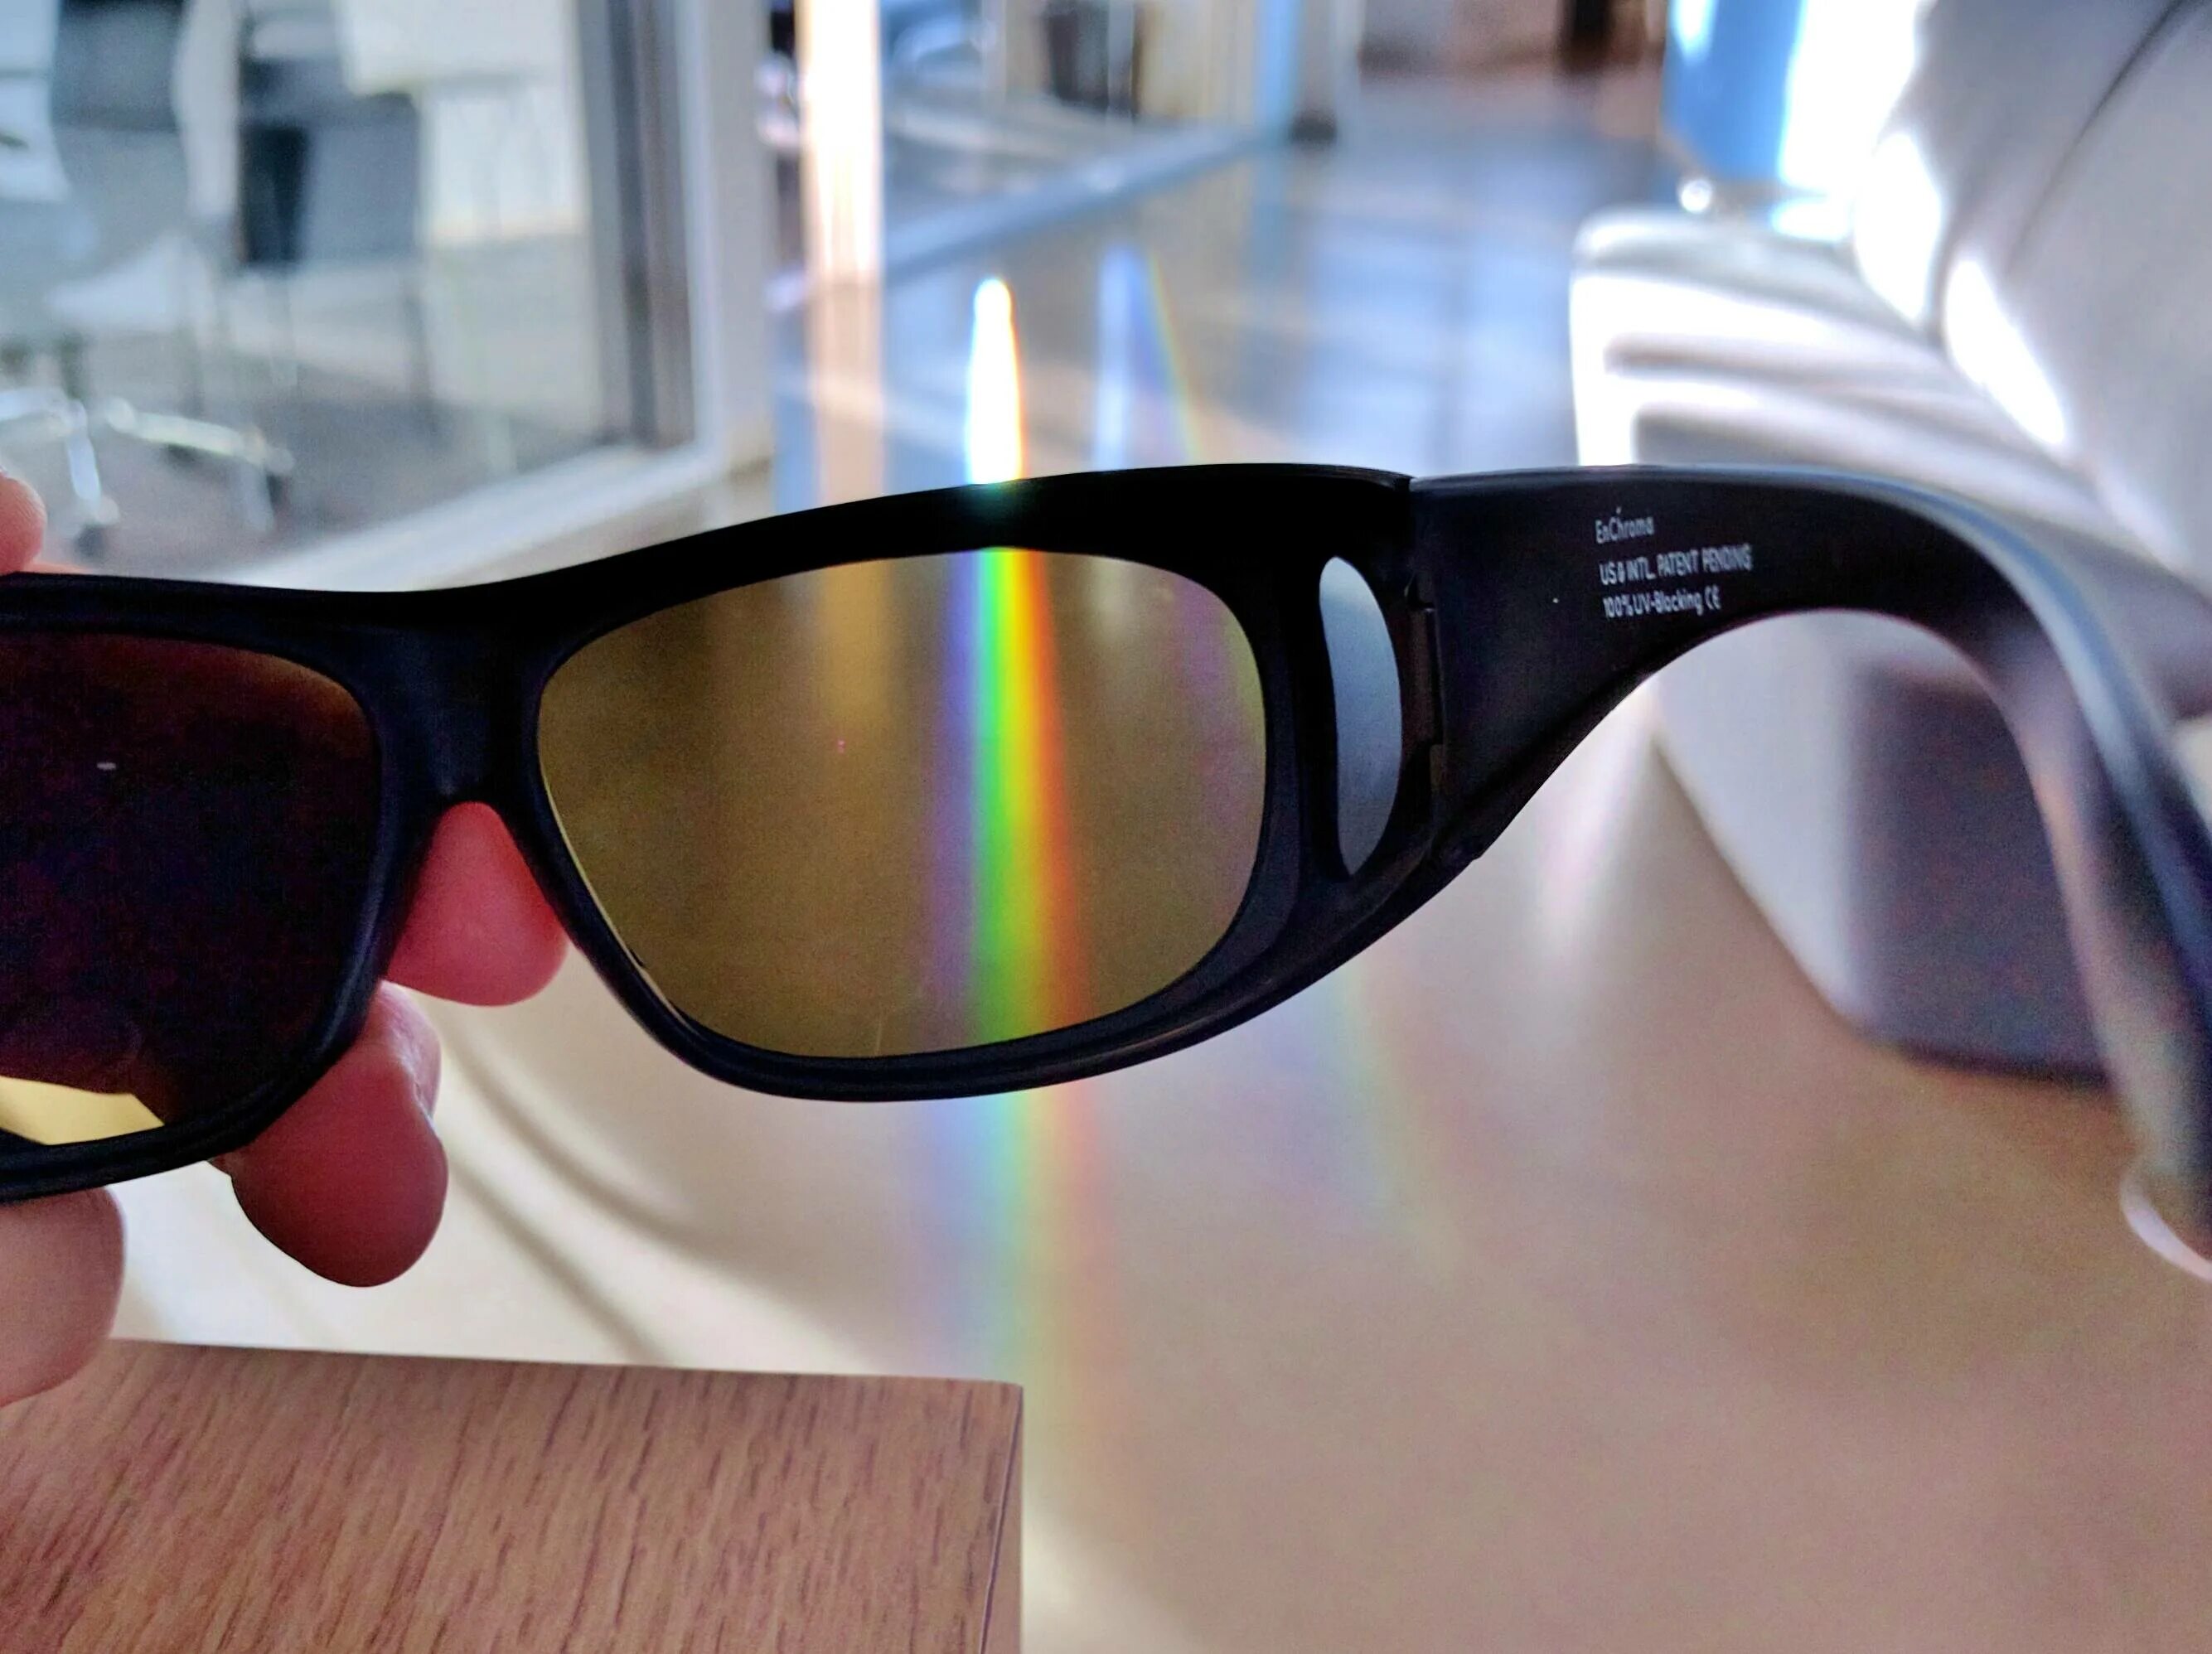 Очки Enchroma. Очки для дальтонизма. Энхрома очки для дальтоников. Очки для коррекции цветовосприятия.